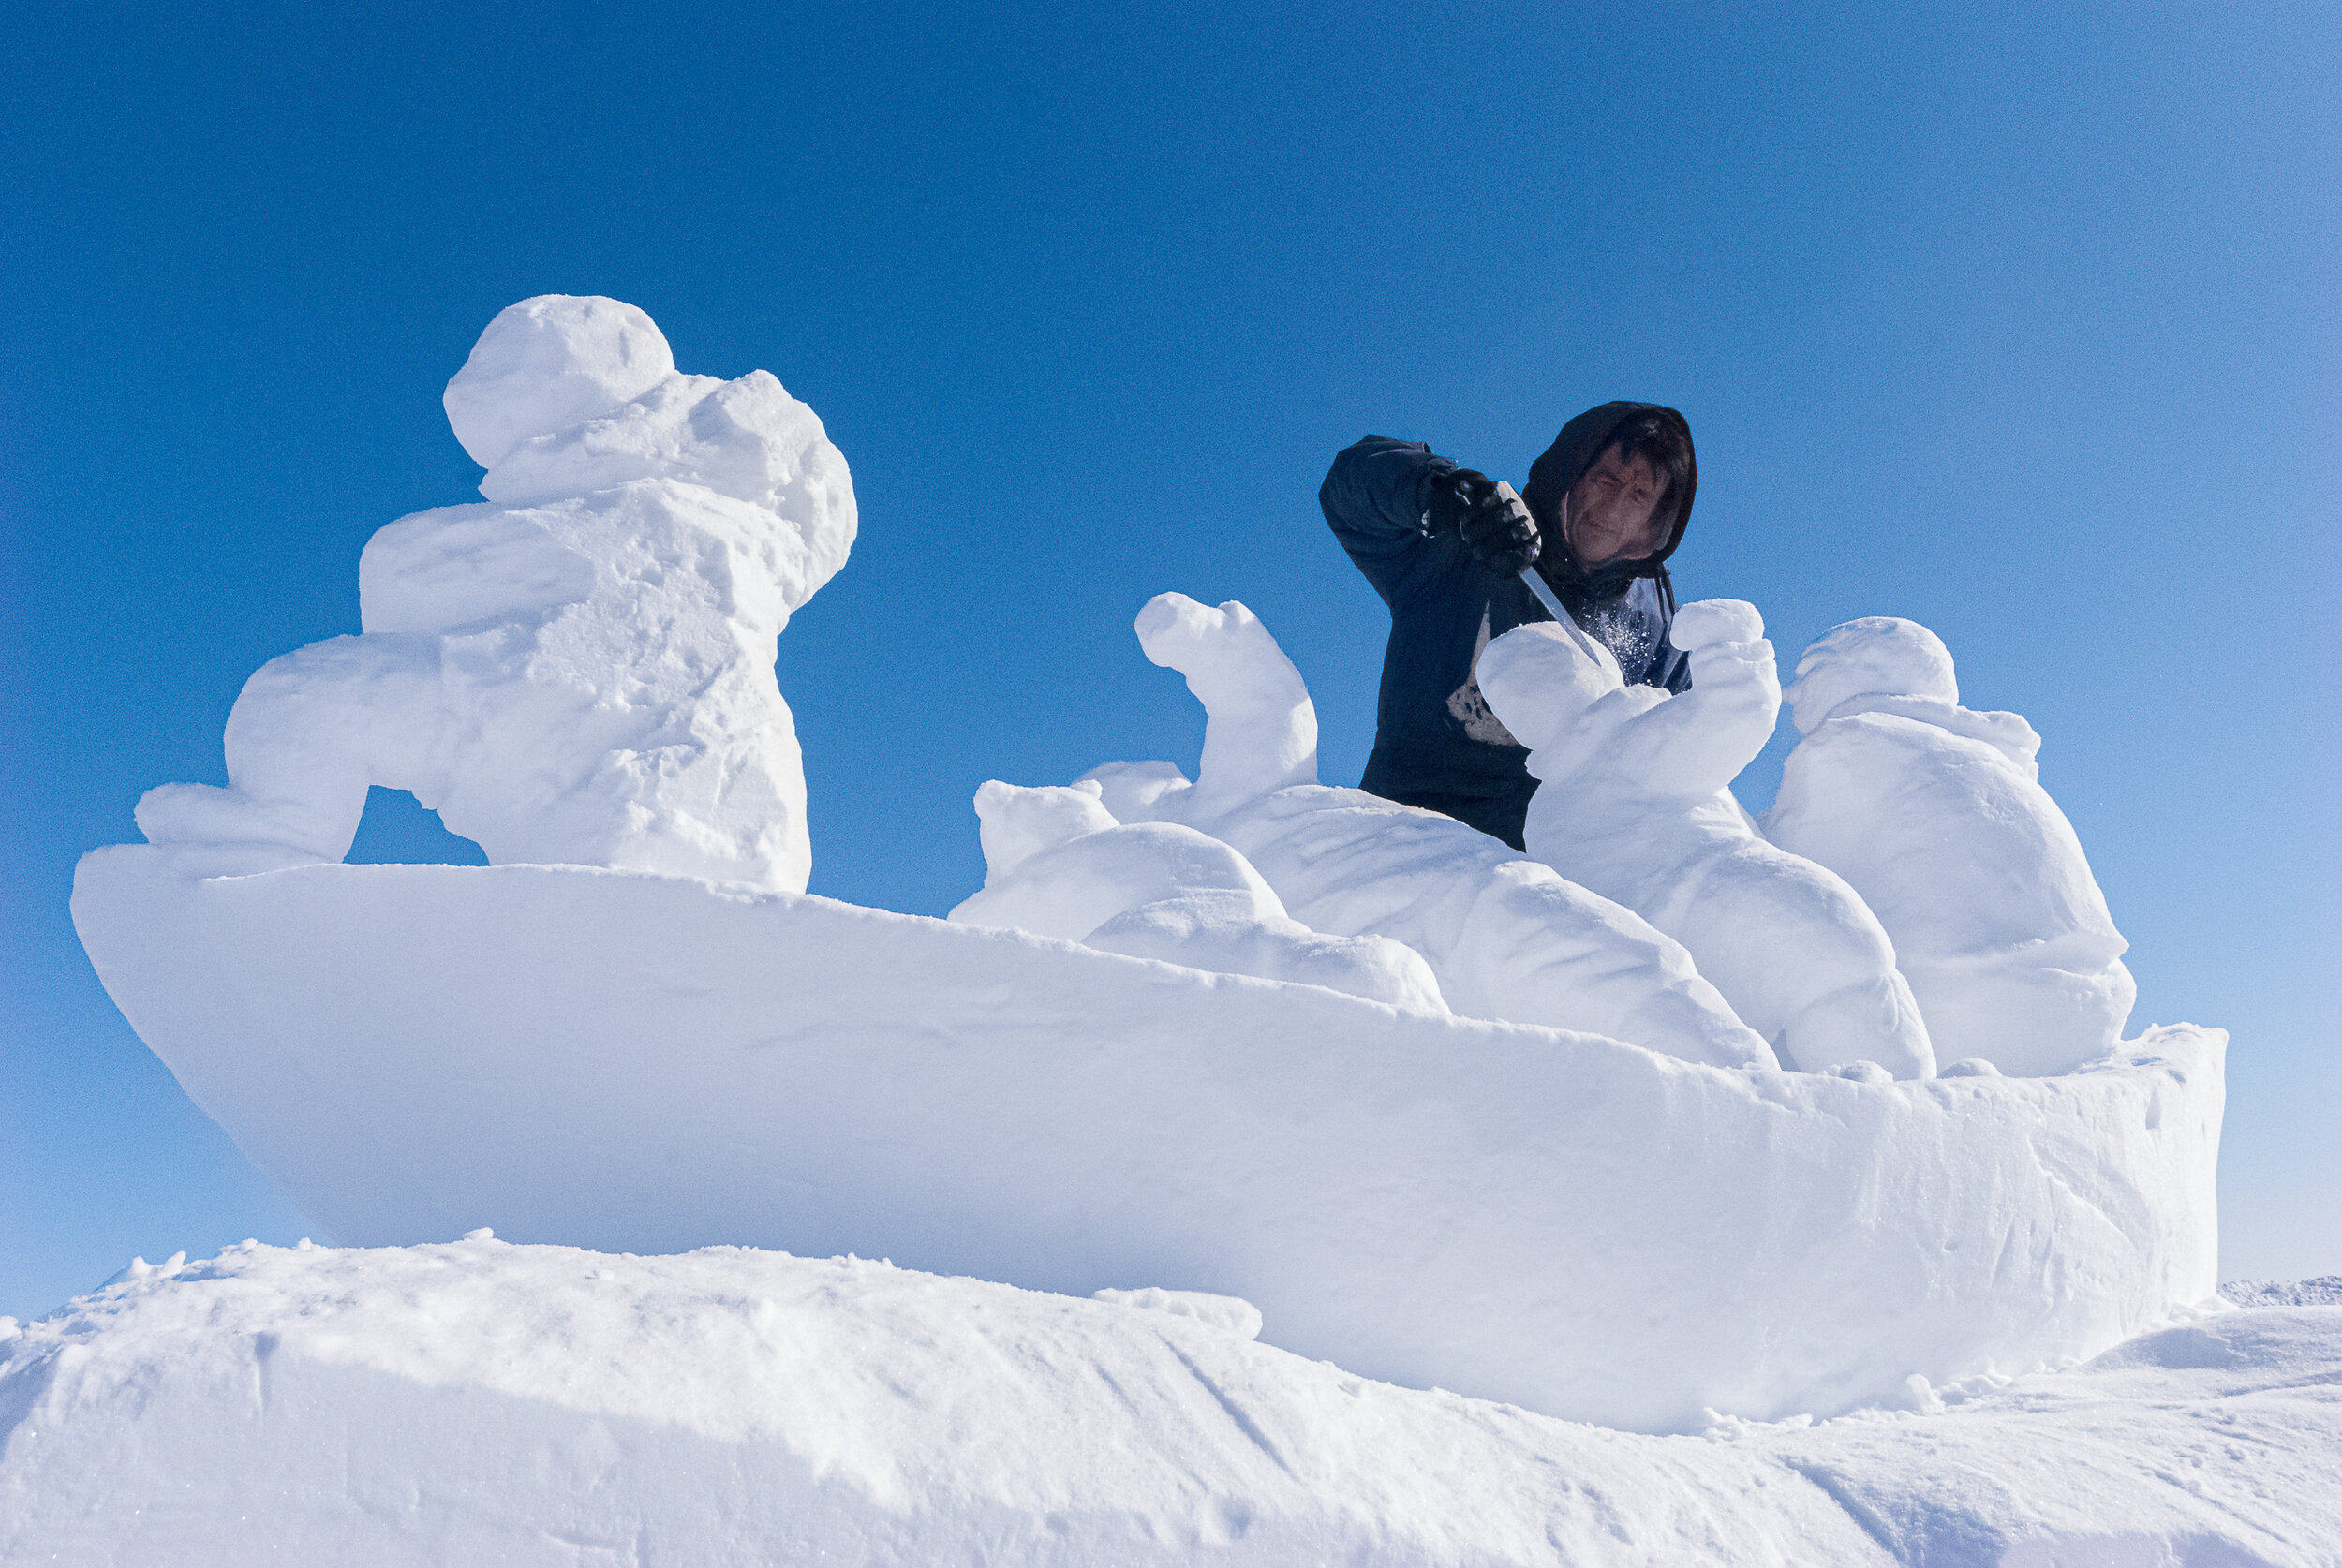 The Snow Sculpture